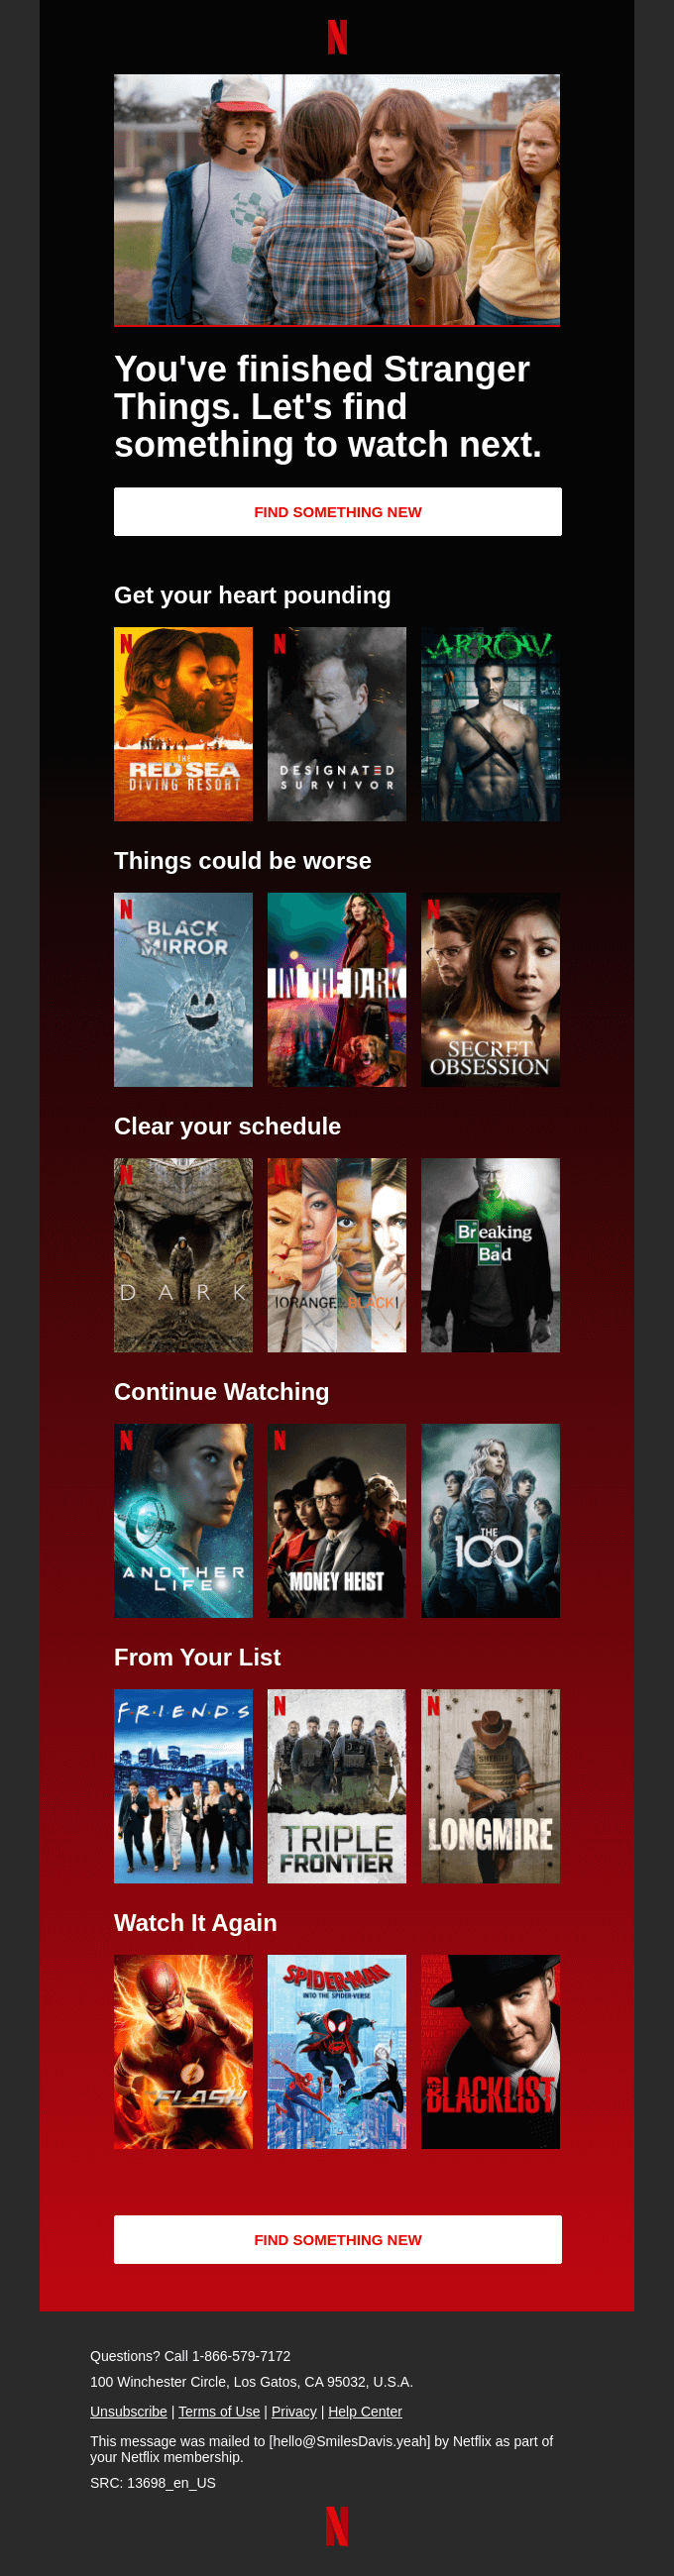 Netflix consiglia programmi simili all'e-mail di Stranger Things